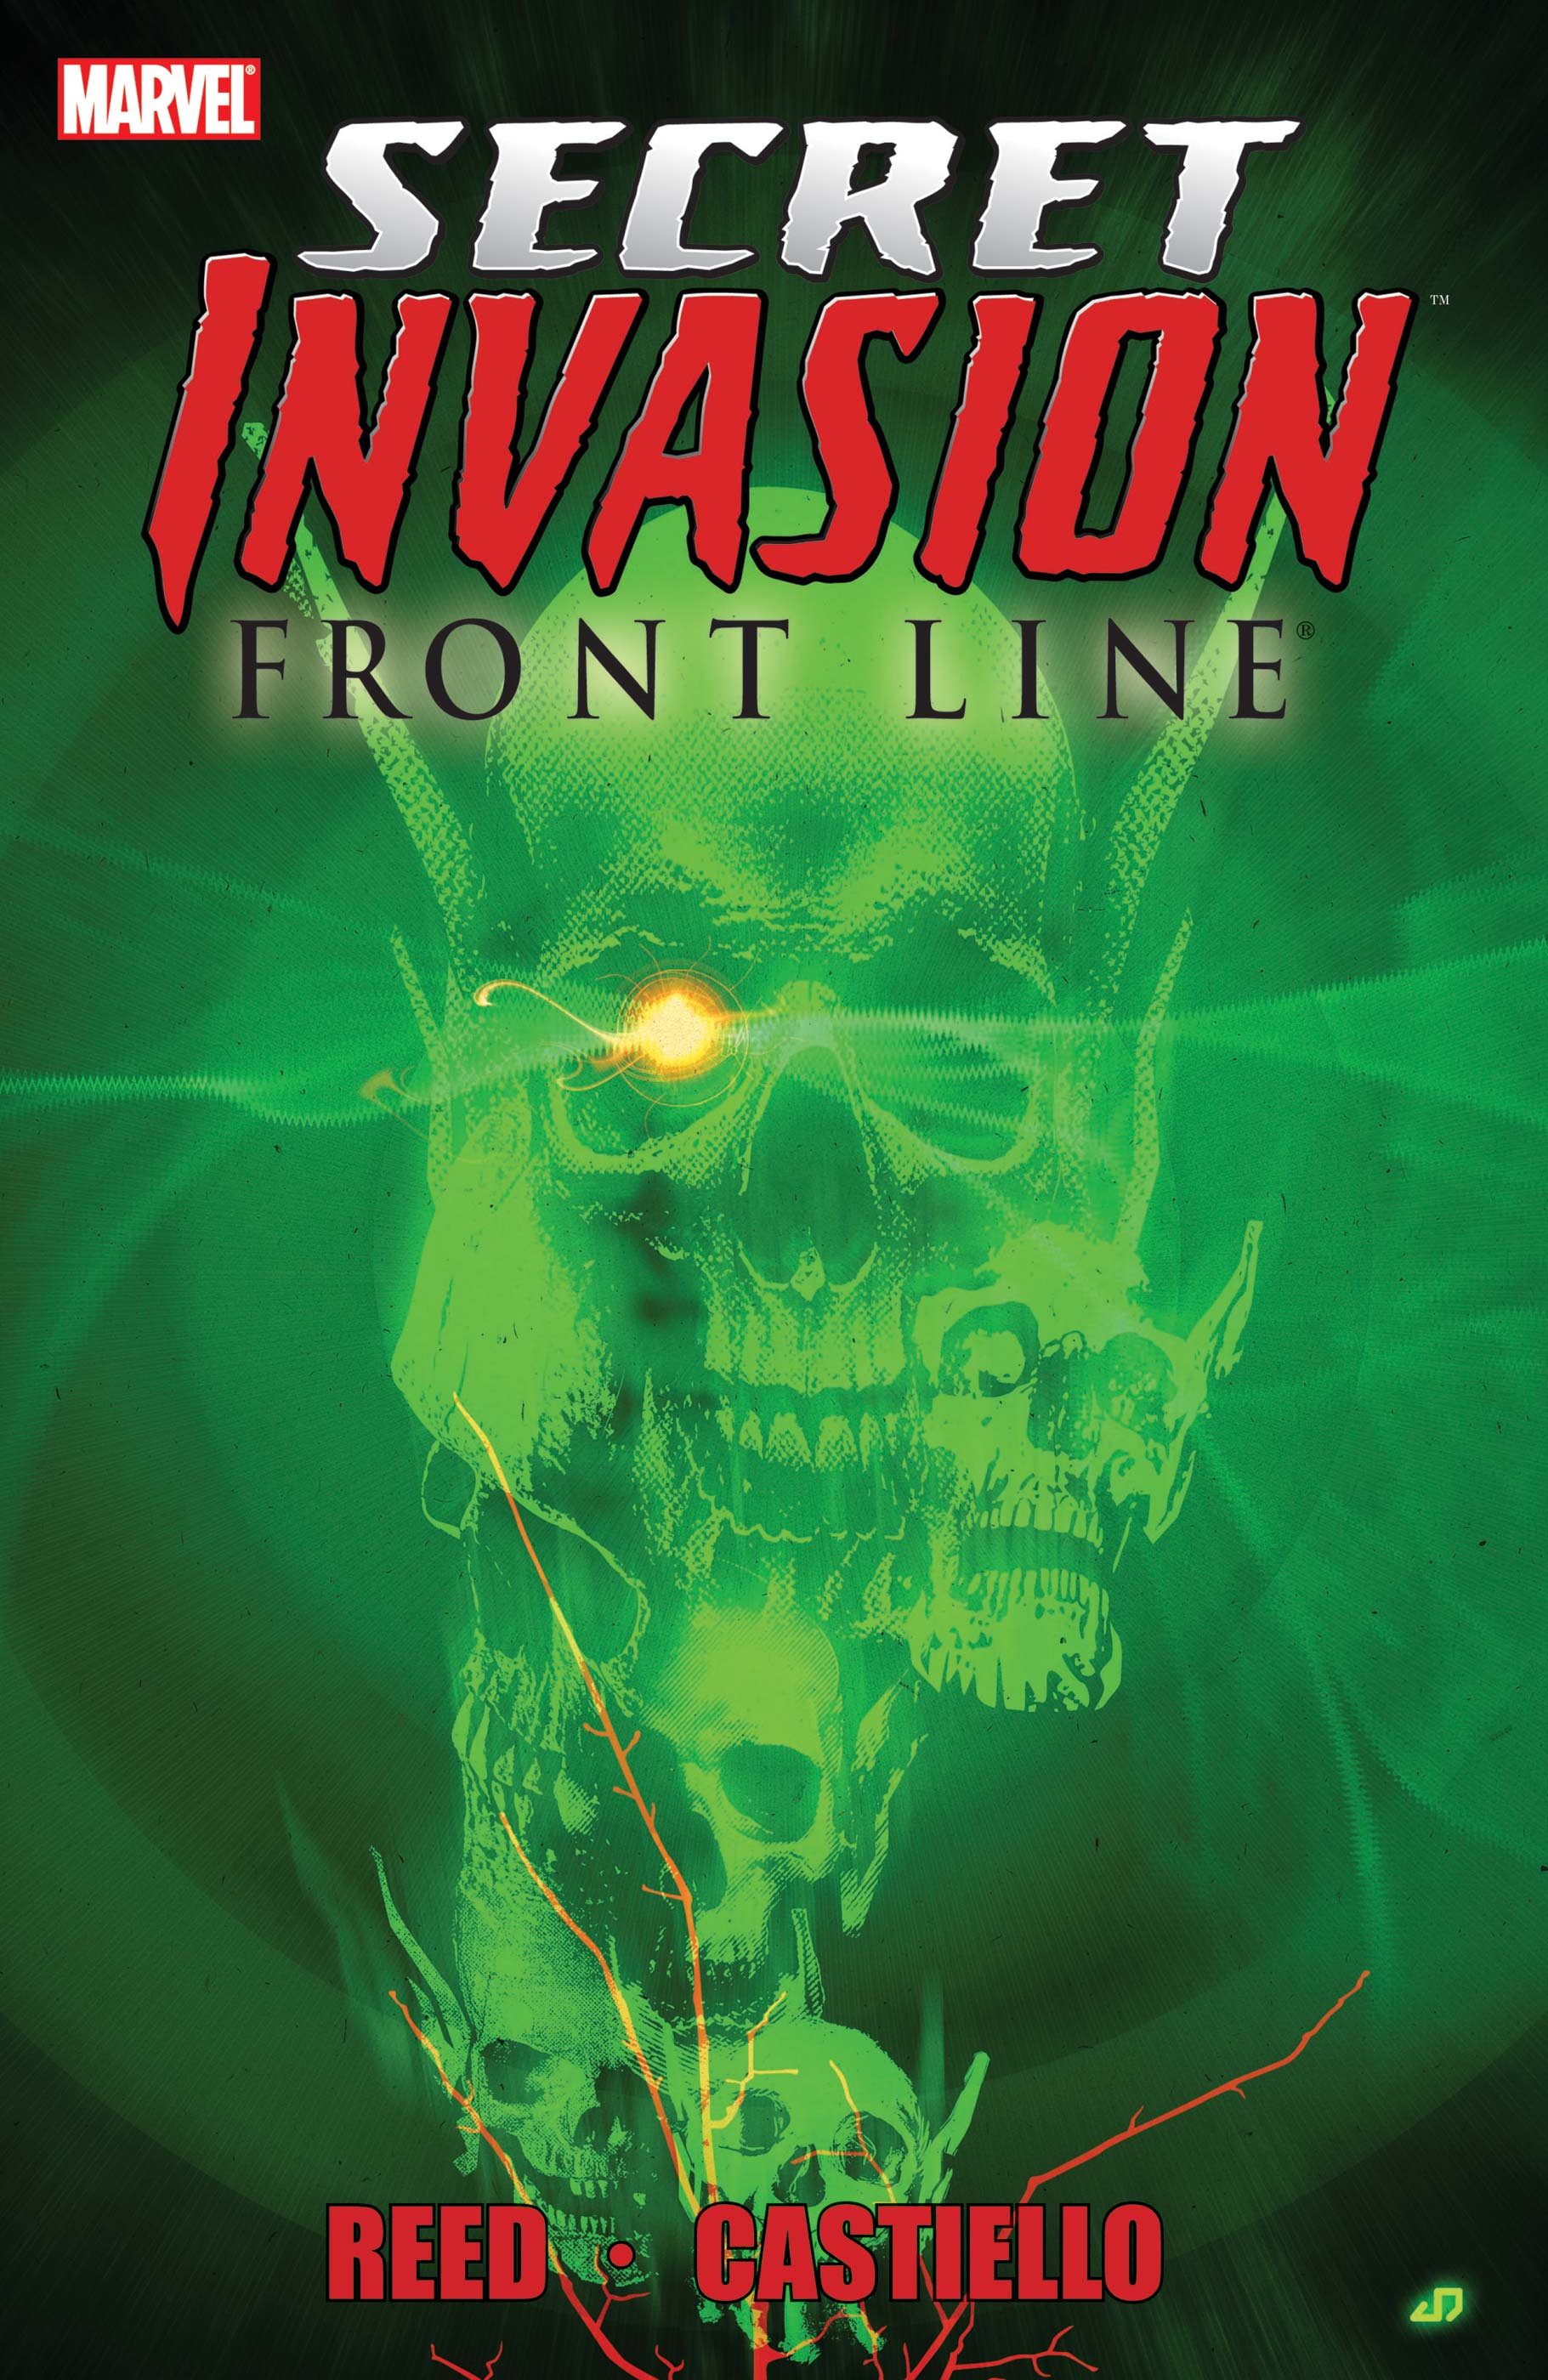 SECRET INVASION: FRONT LINE TPB (Trade Paperback)